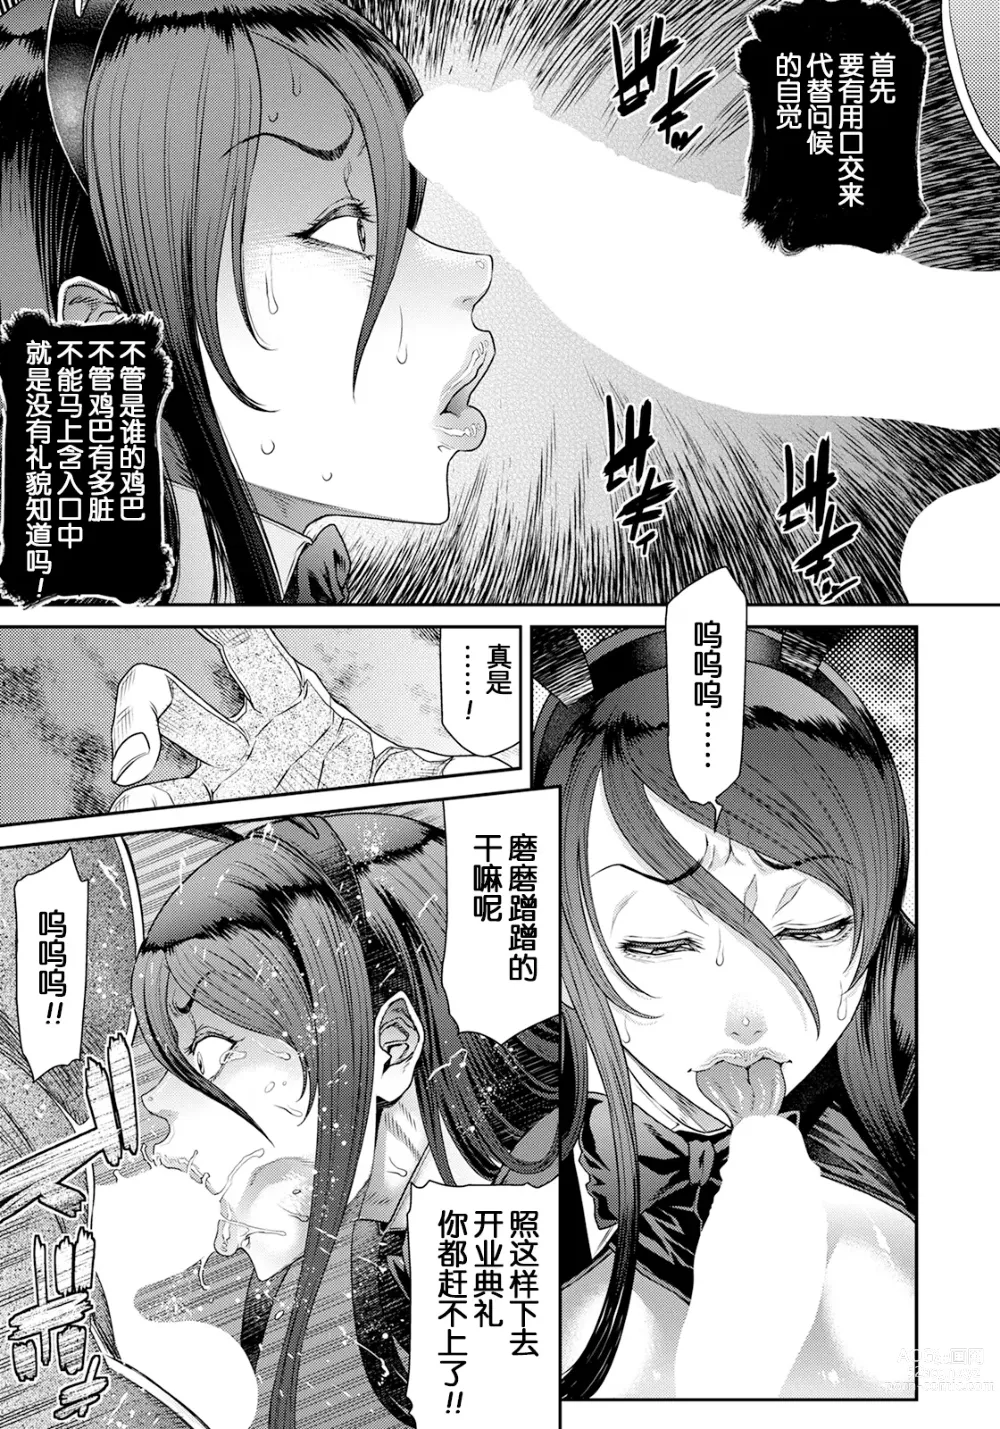 Page 10 of manga Shinise Ryokan